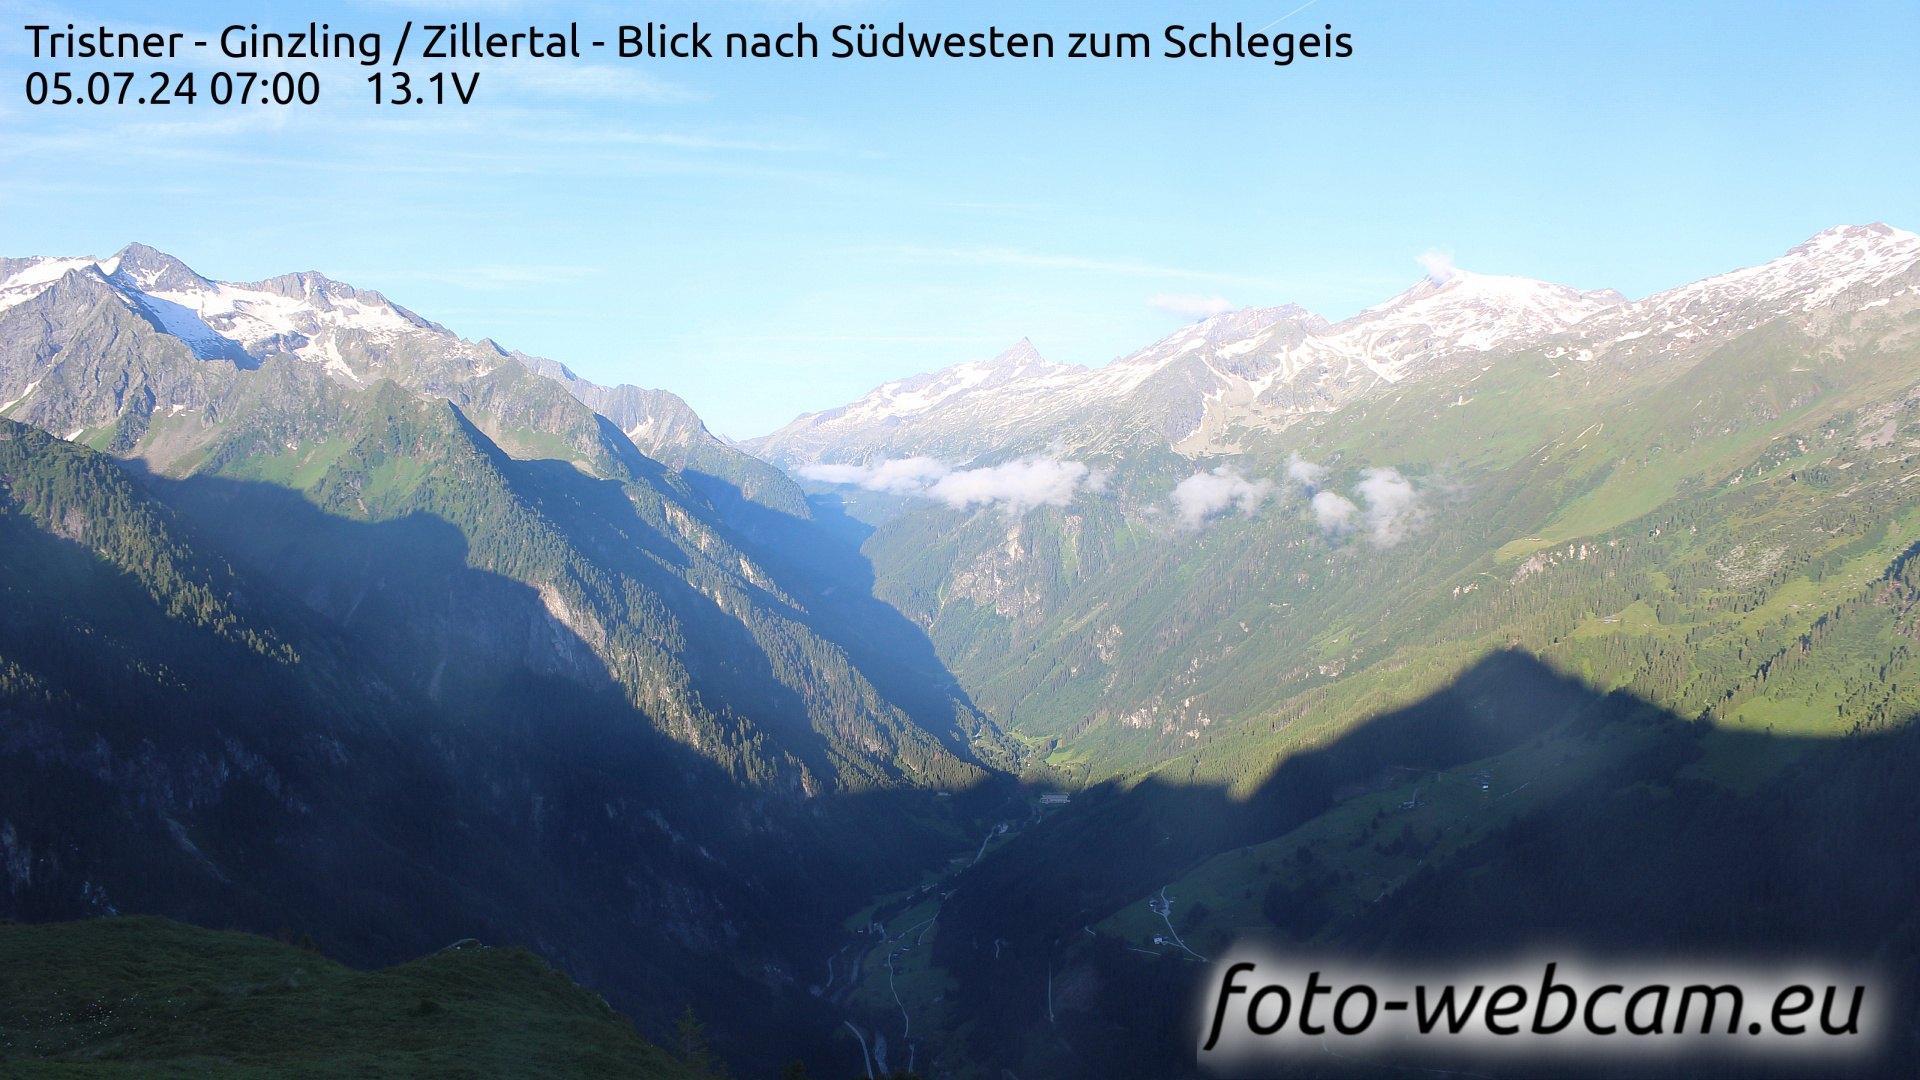 Mayrhofen Wed. 07:01